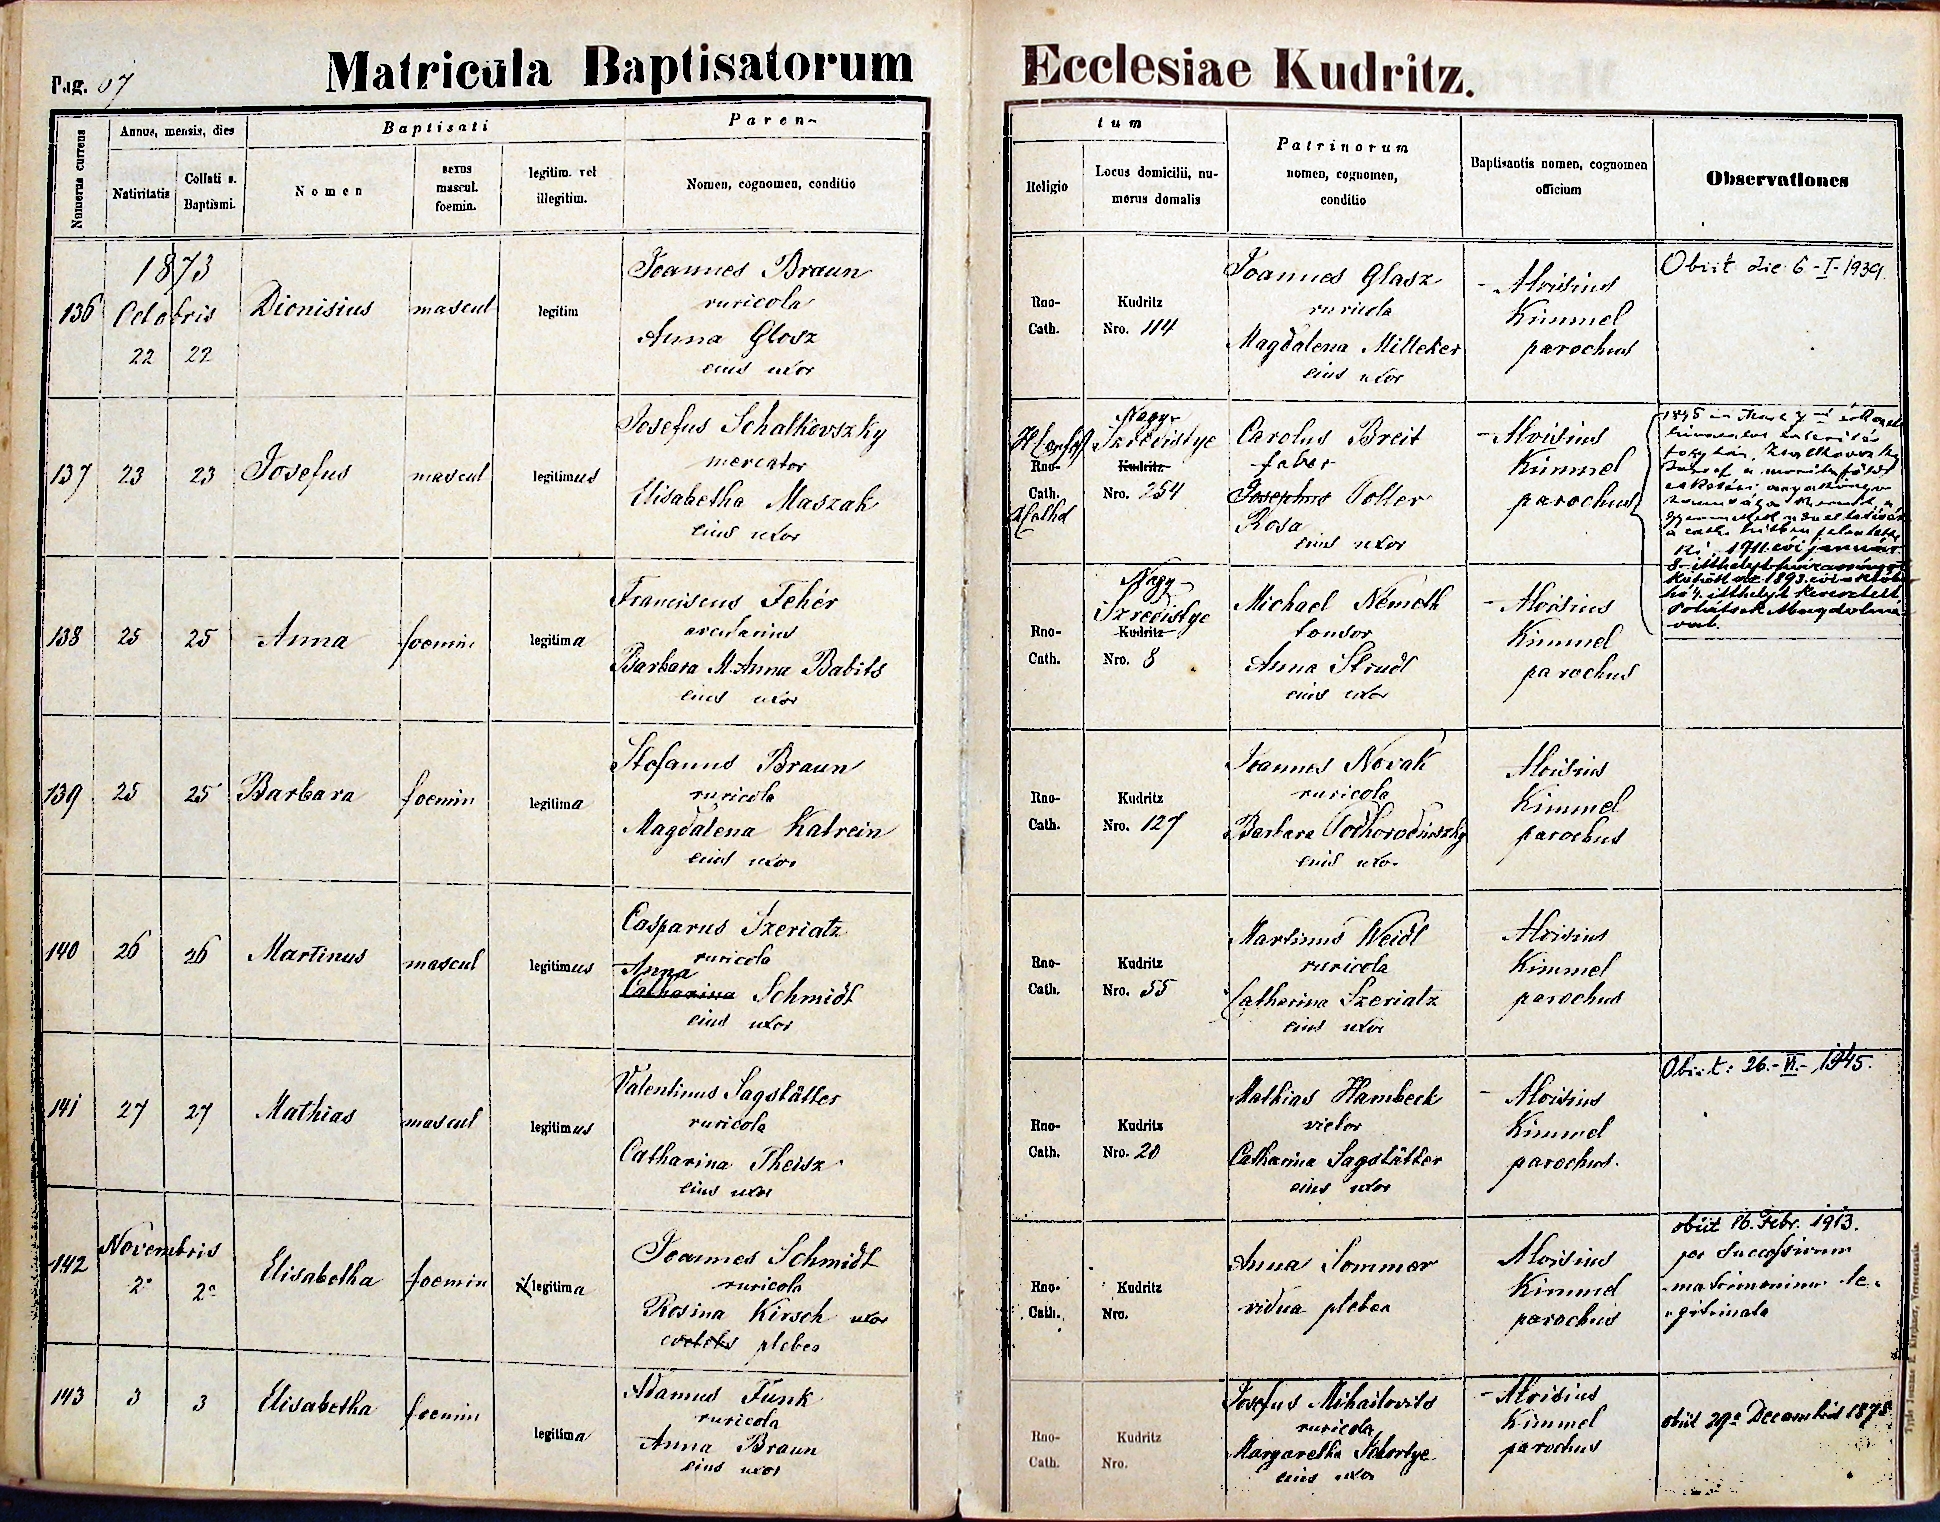 images/church_records/BIRTHS/1884-1899B/1887/067